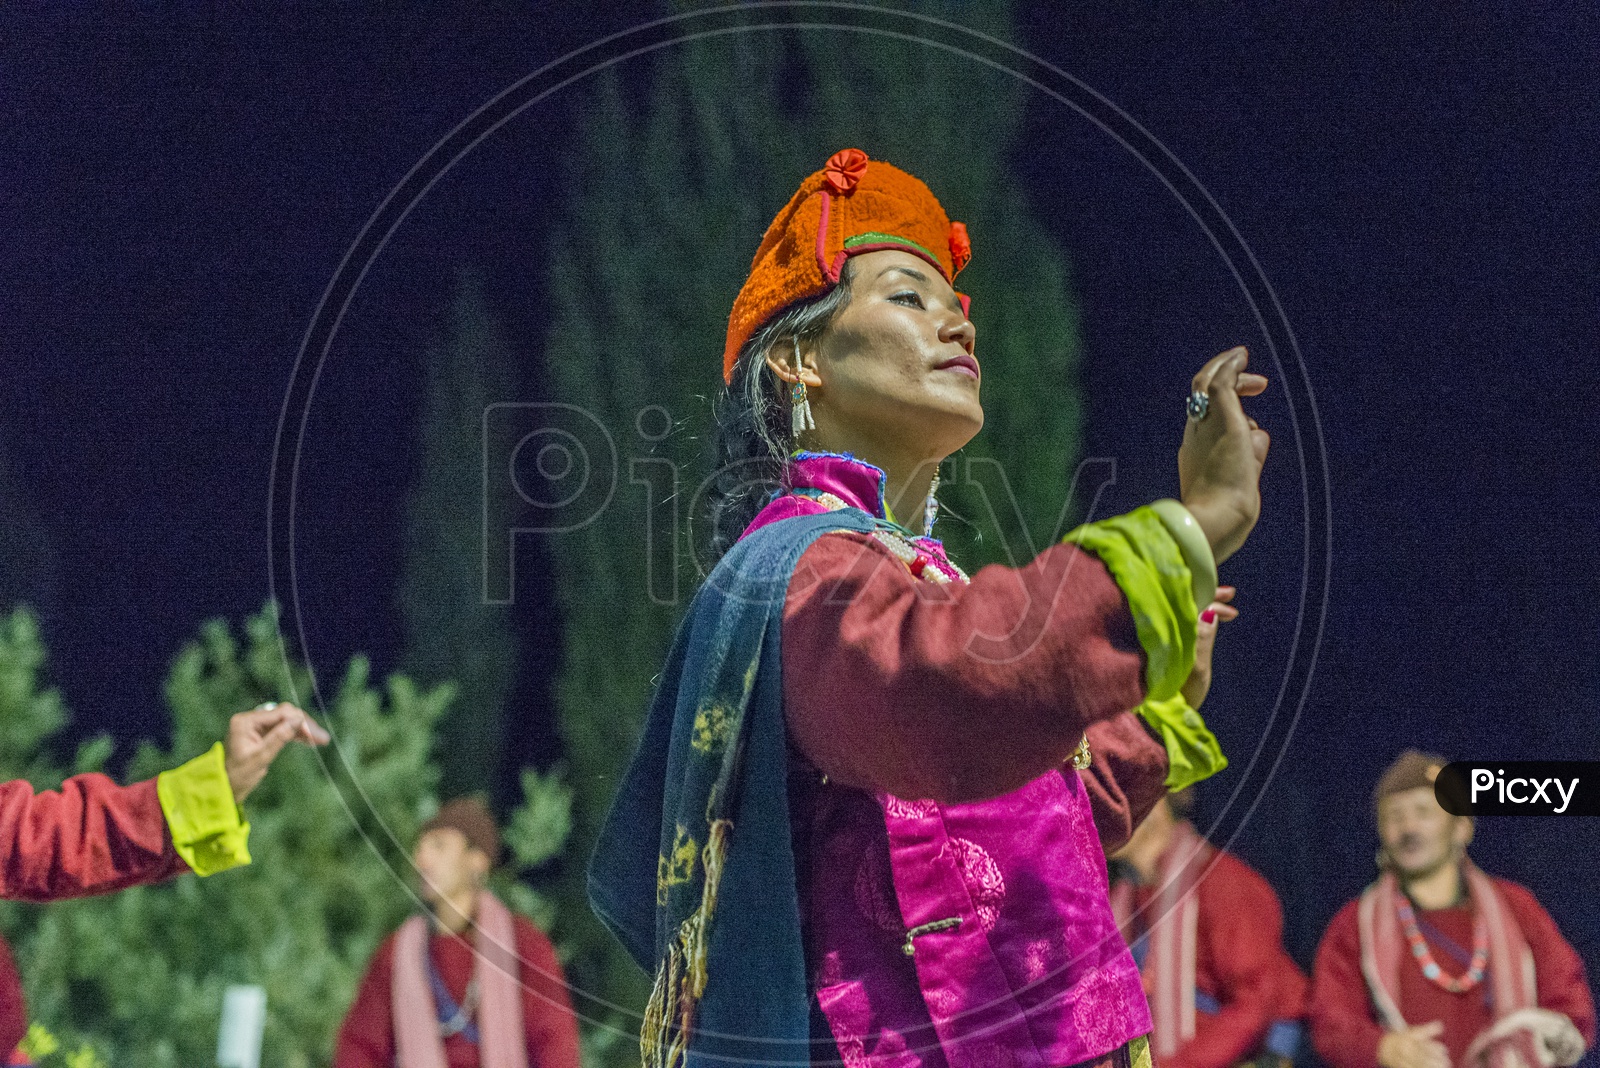 Ladakhi Dance